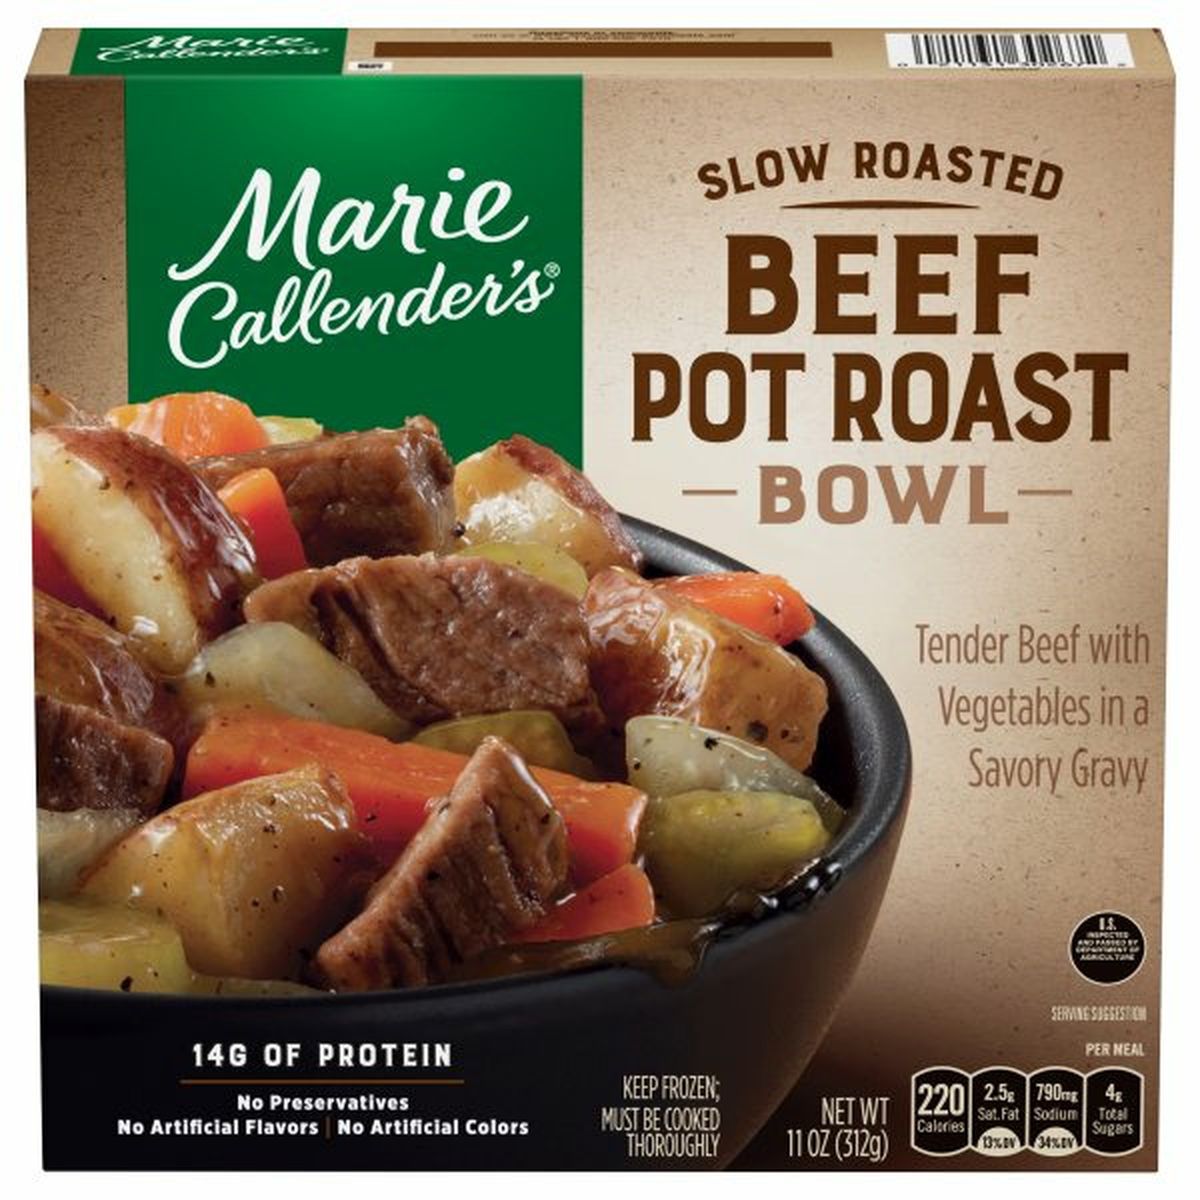 Calories in Marie Callender's Bowl, Beef Pot Roast, Slow Roasted